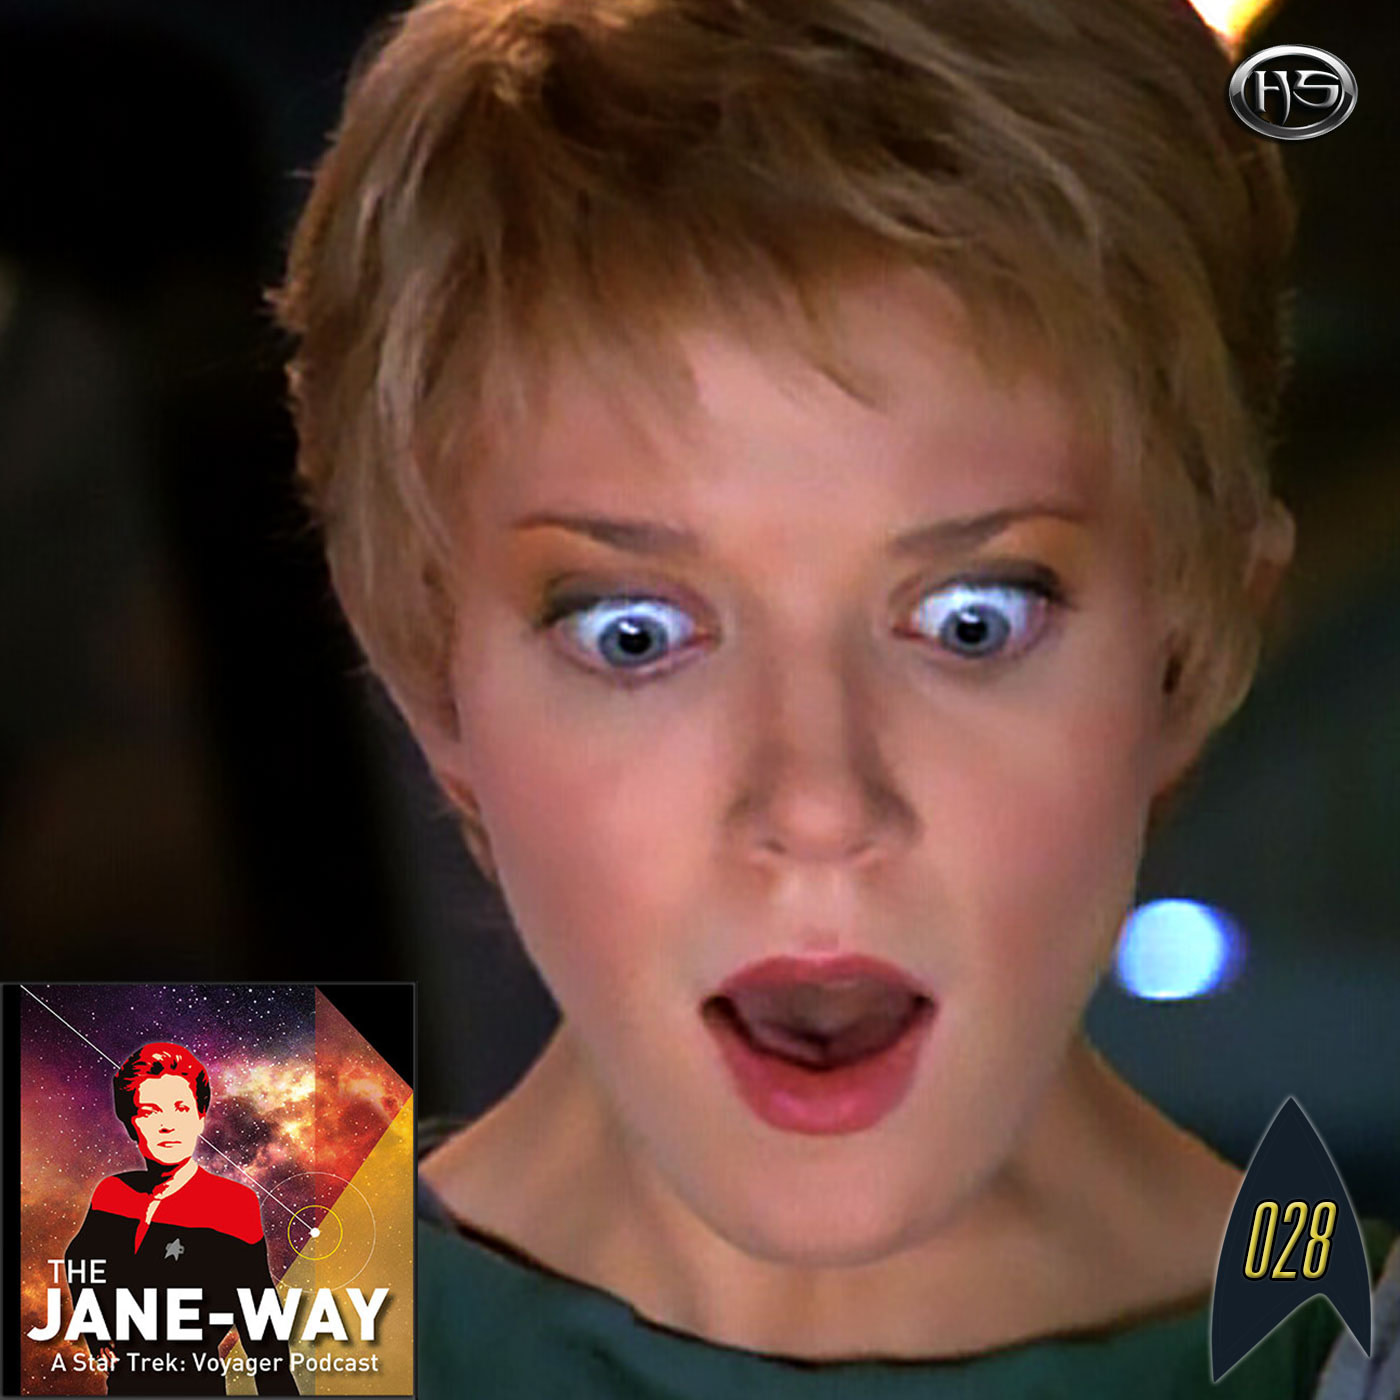 The Jane-Way Episode 28